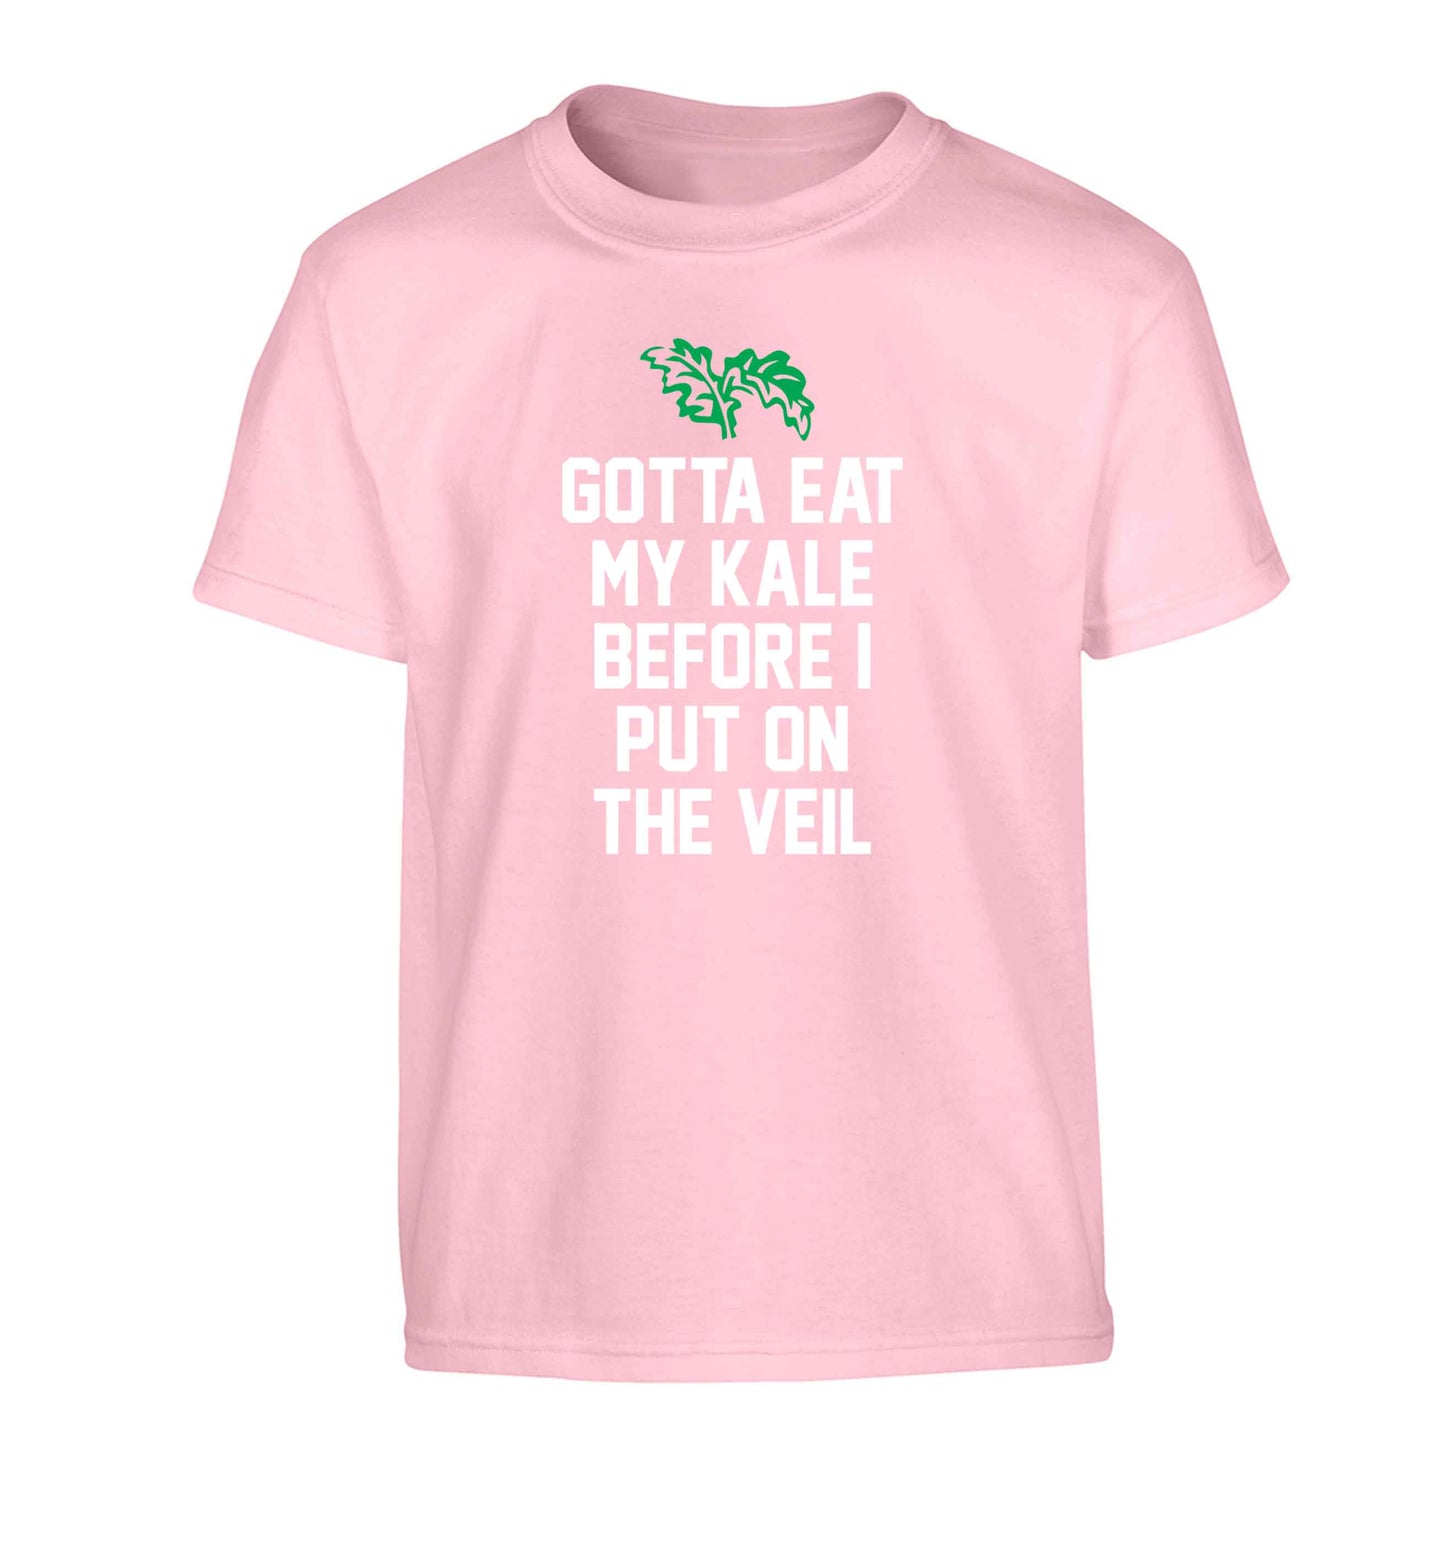 Gotta eat my kale before I put on the veil Children's light pink Tshirt 12-13 Years